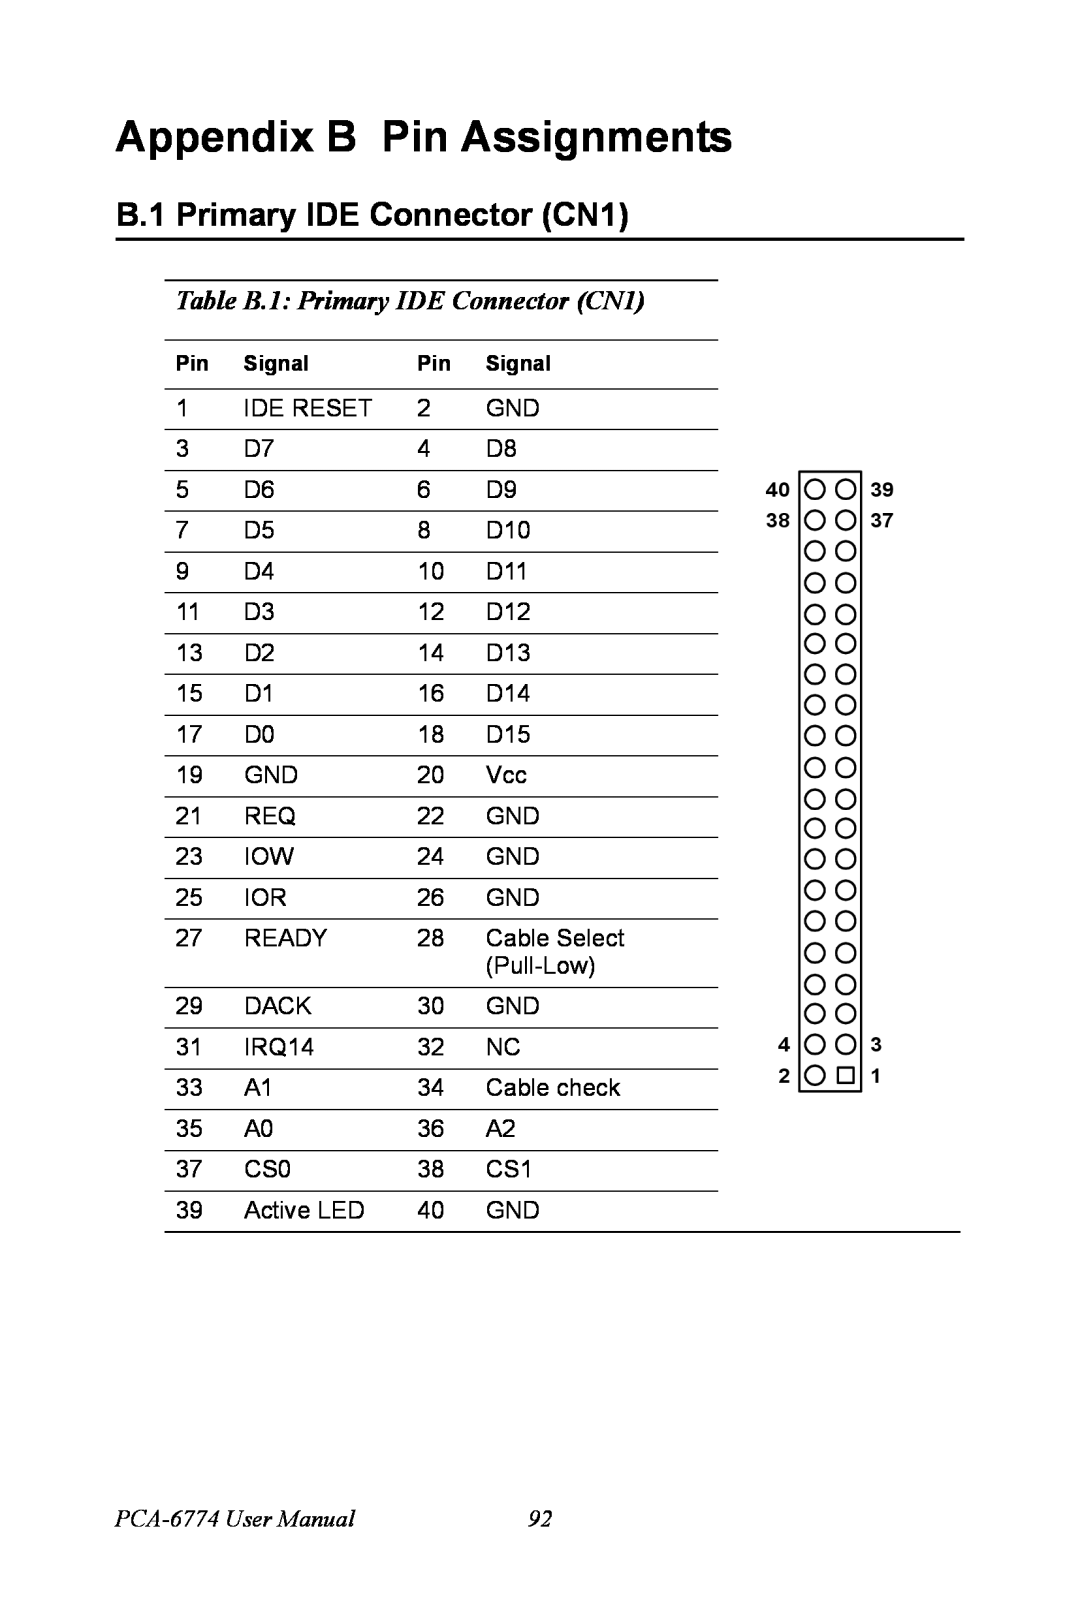 Advantech user manual Appendix B Pin Assignments, Table B.1 Primary IDE Connector CN1, PCA-6774 User Manual 